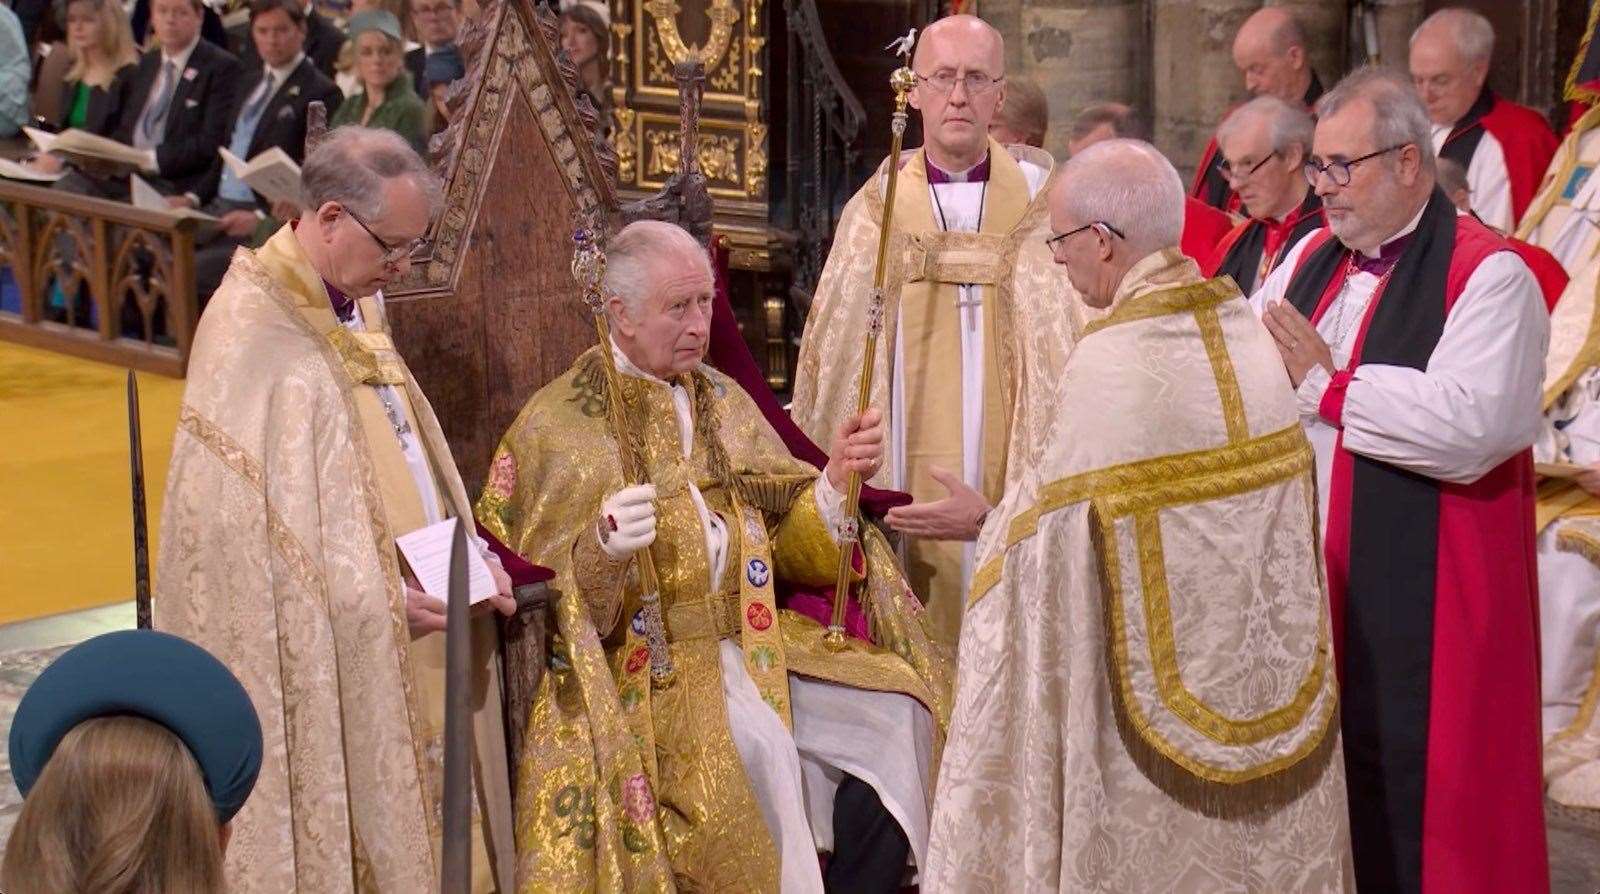 Bishop Mark Strange (far right) at the coronation.